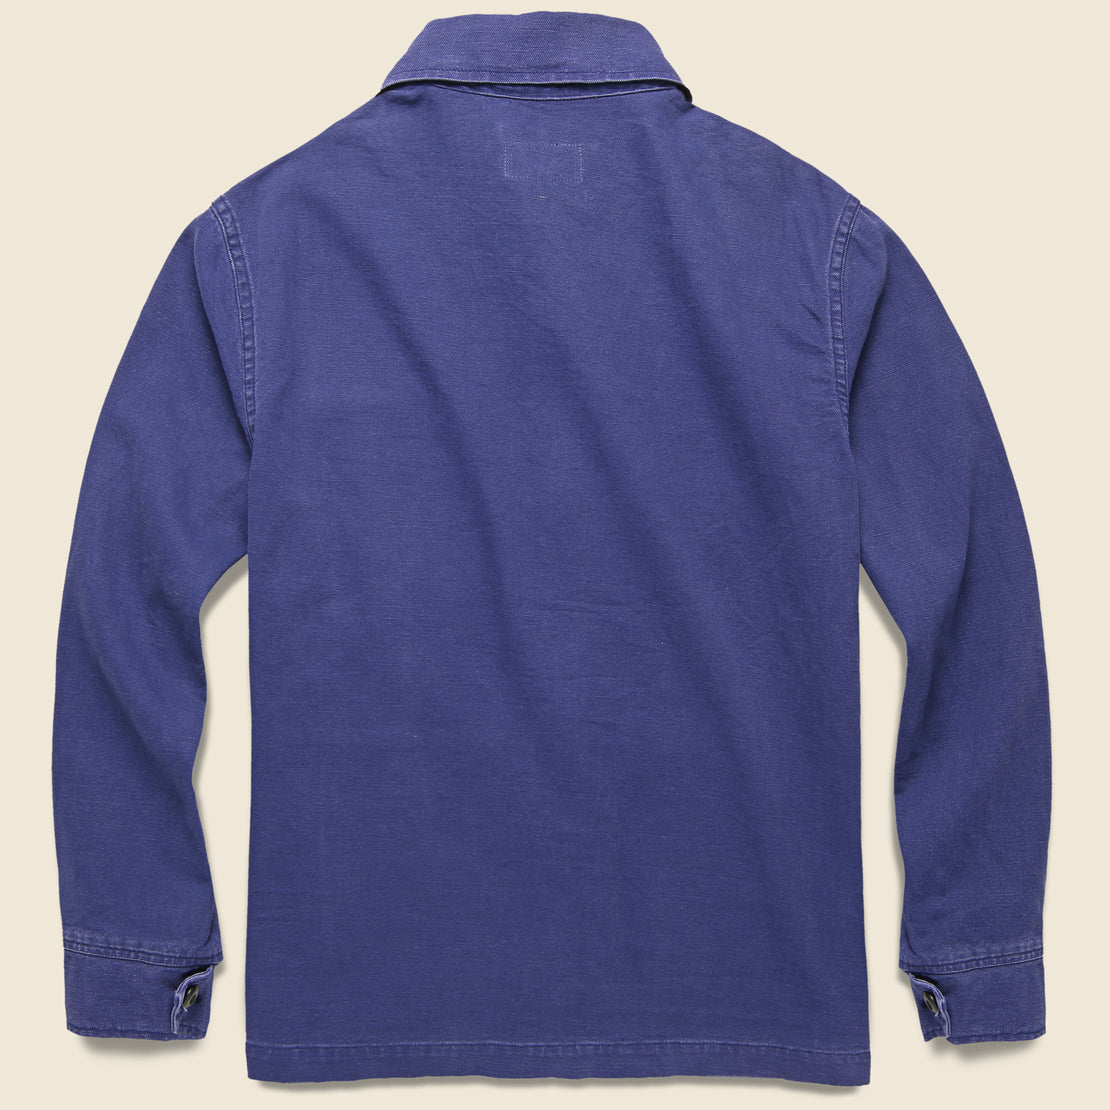 Jack Jacket - French Blue - Imogene + Willie - STAG Provisions - Outerwear - Shirt Jacket